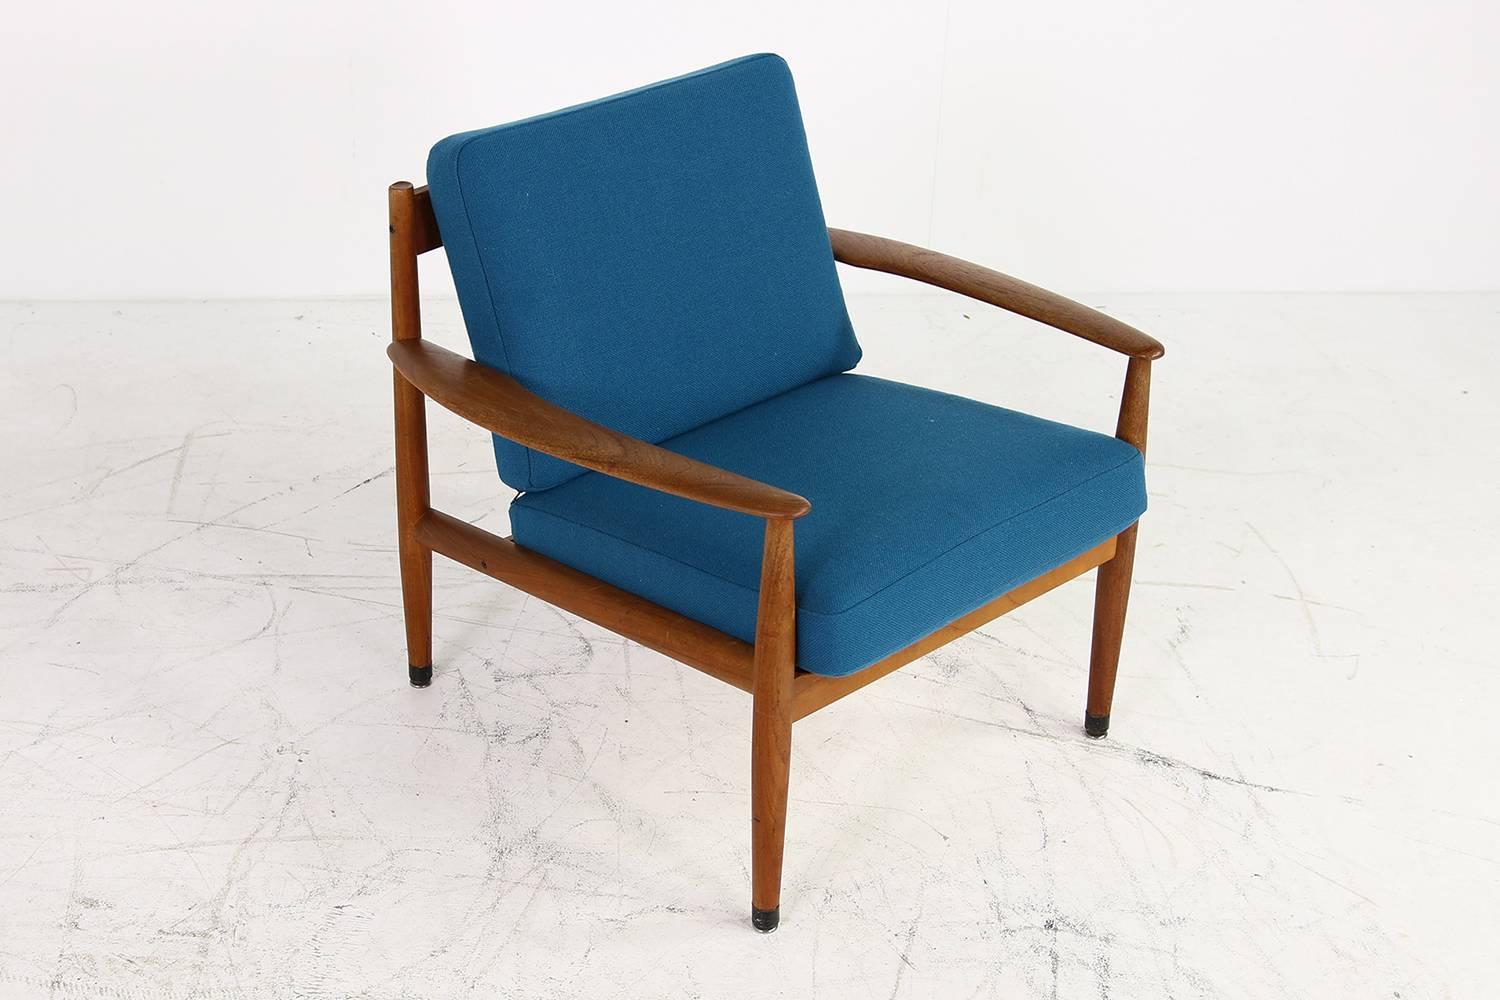 Mid-20th Century Danish Modern, 1960s Grete Jalk Teak Easy Chair by France & Son Denmark, Petrol